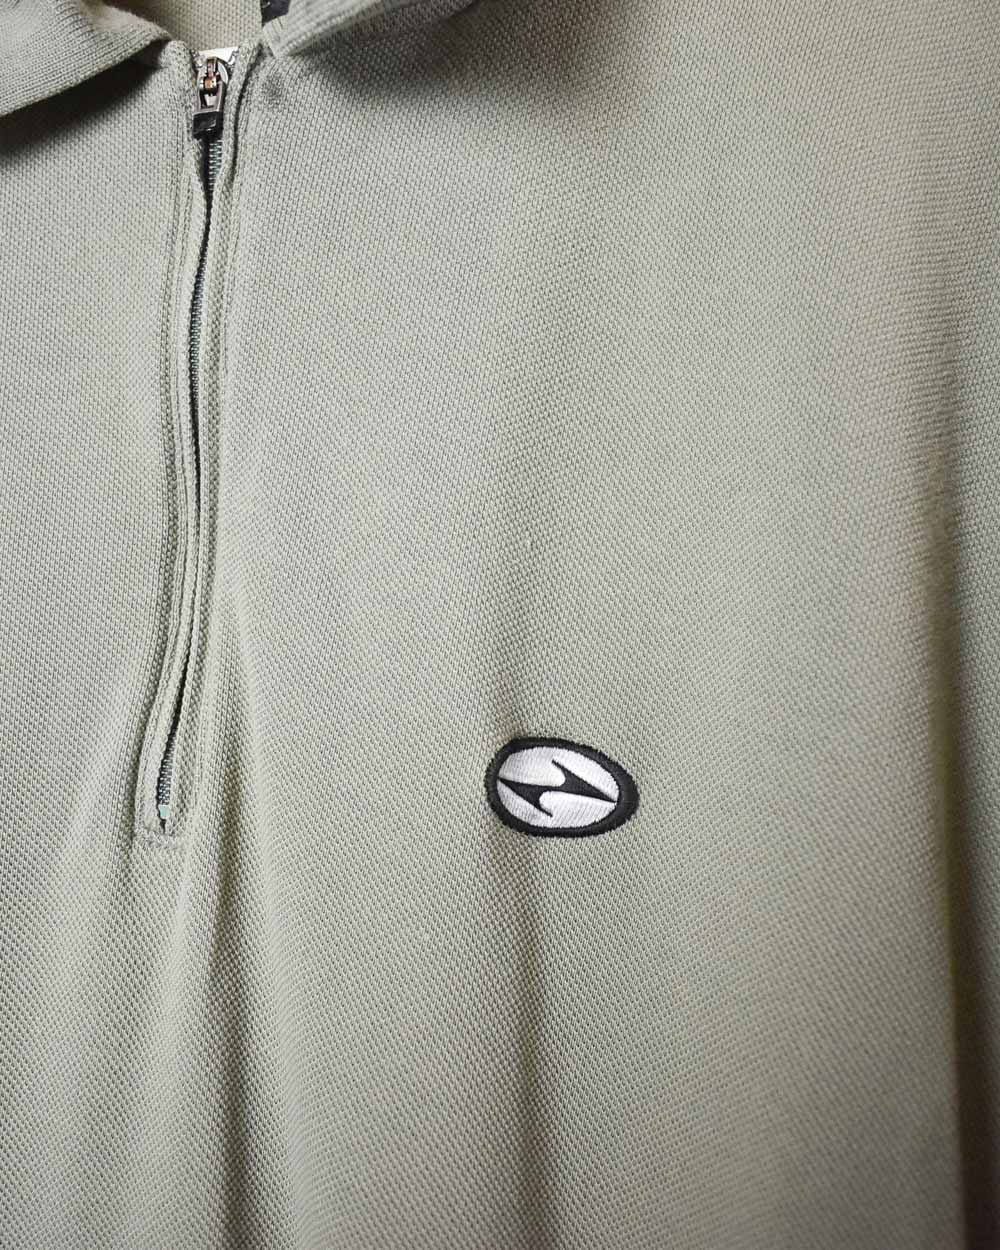 Khaki Nike Tiger Woods Ying Yang 1/4 Zip Polo Shirt - Large